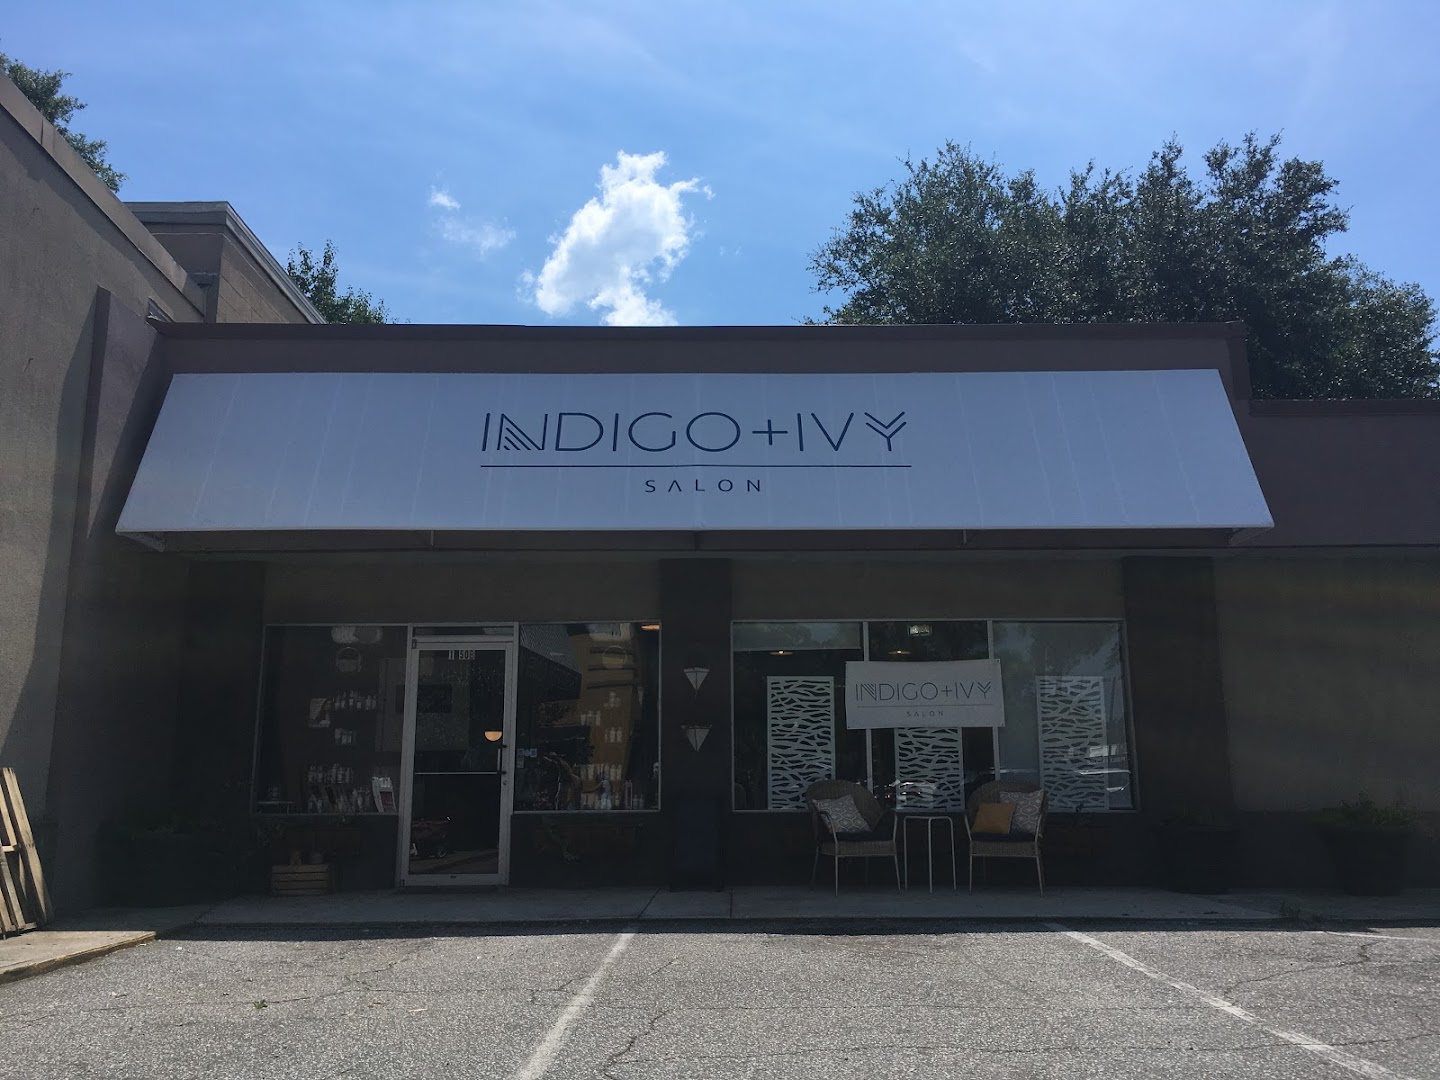 Indigo+Ivy Salon